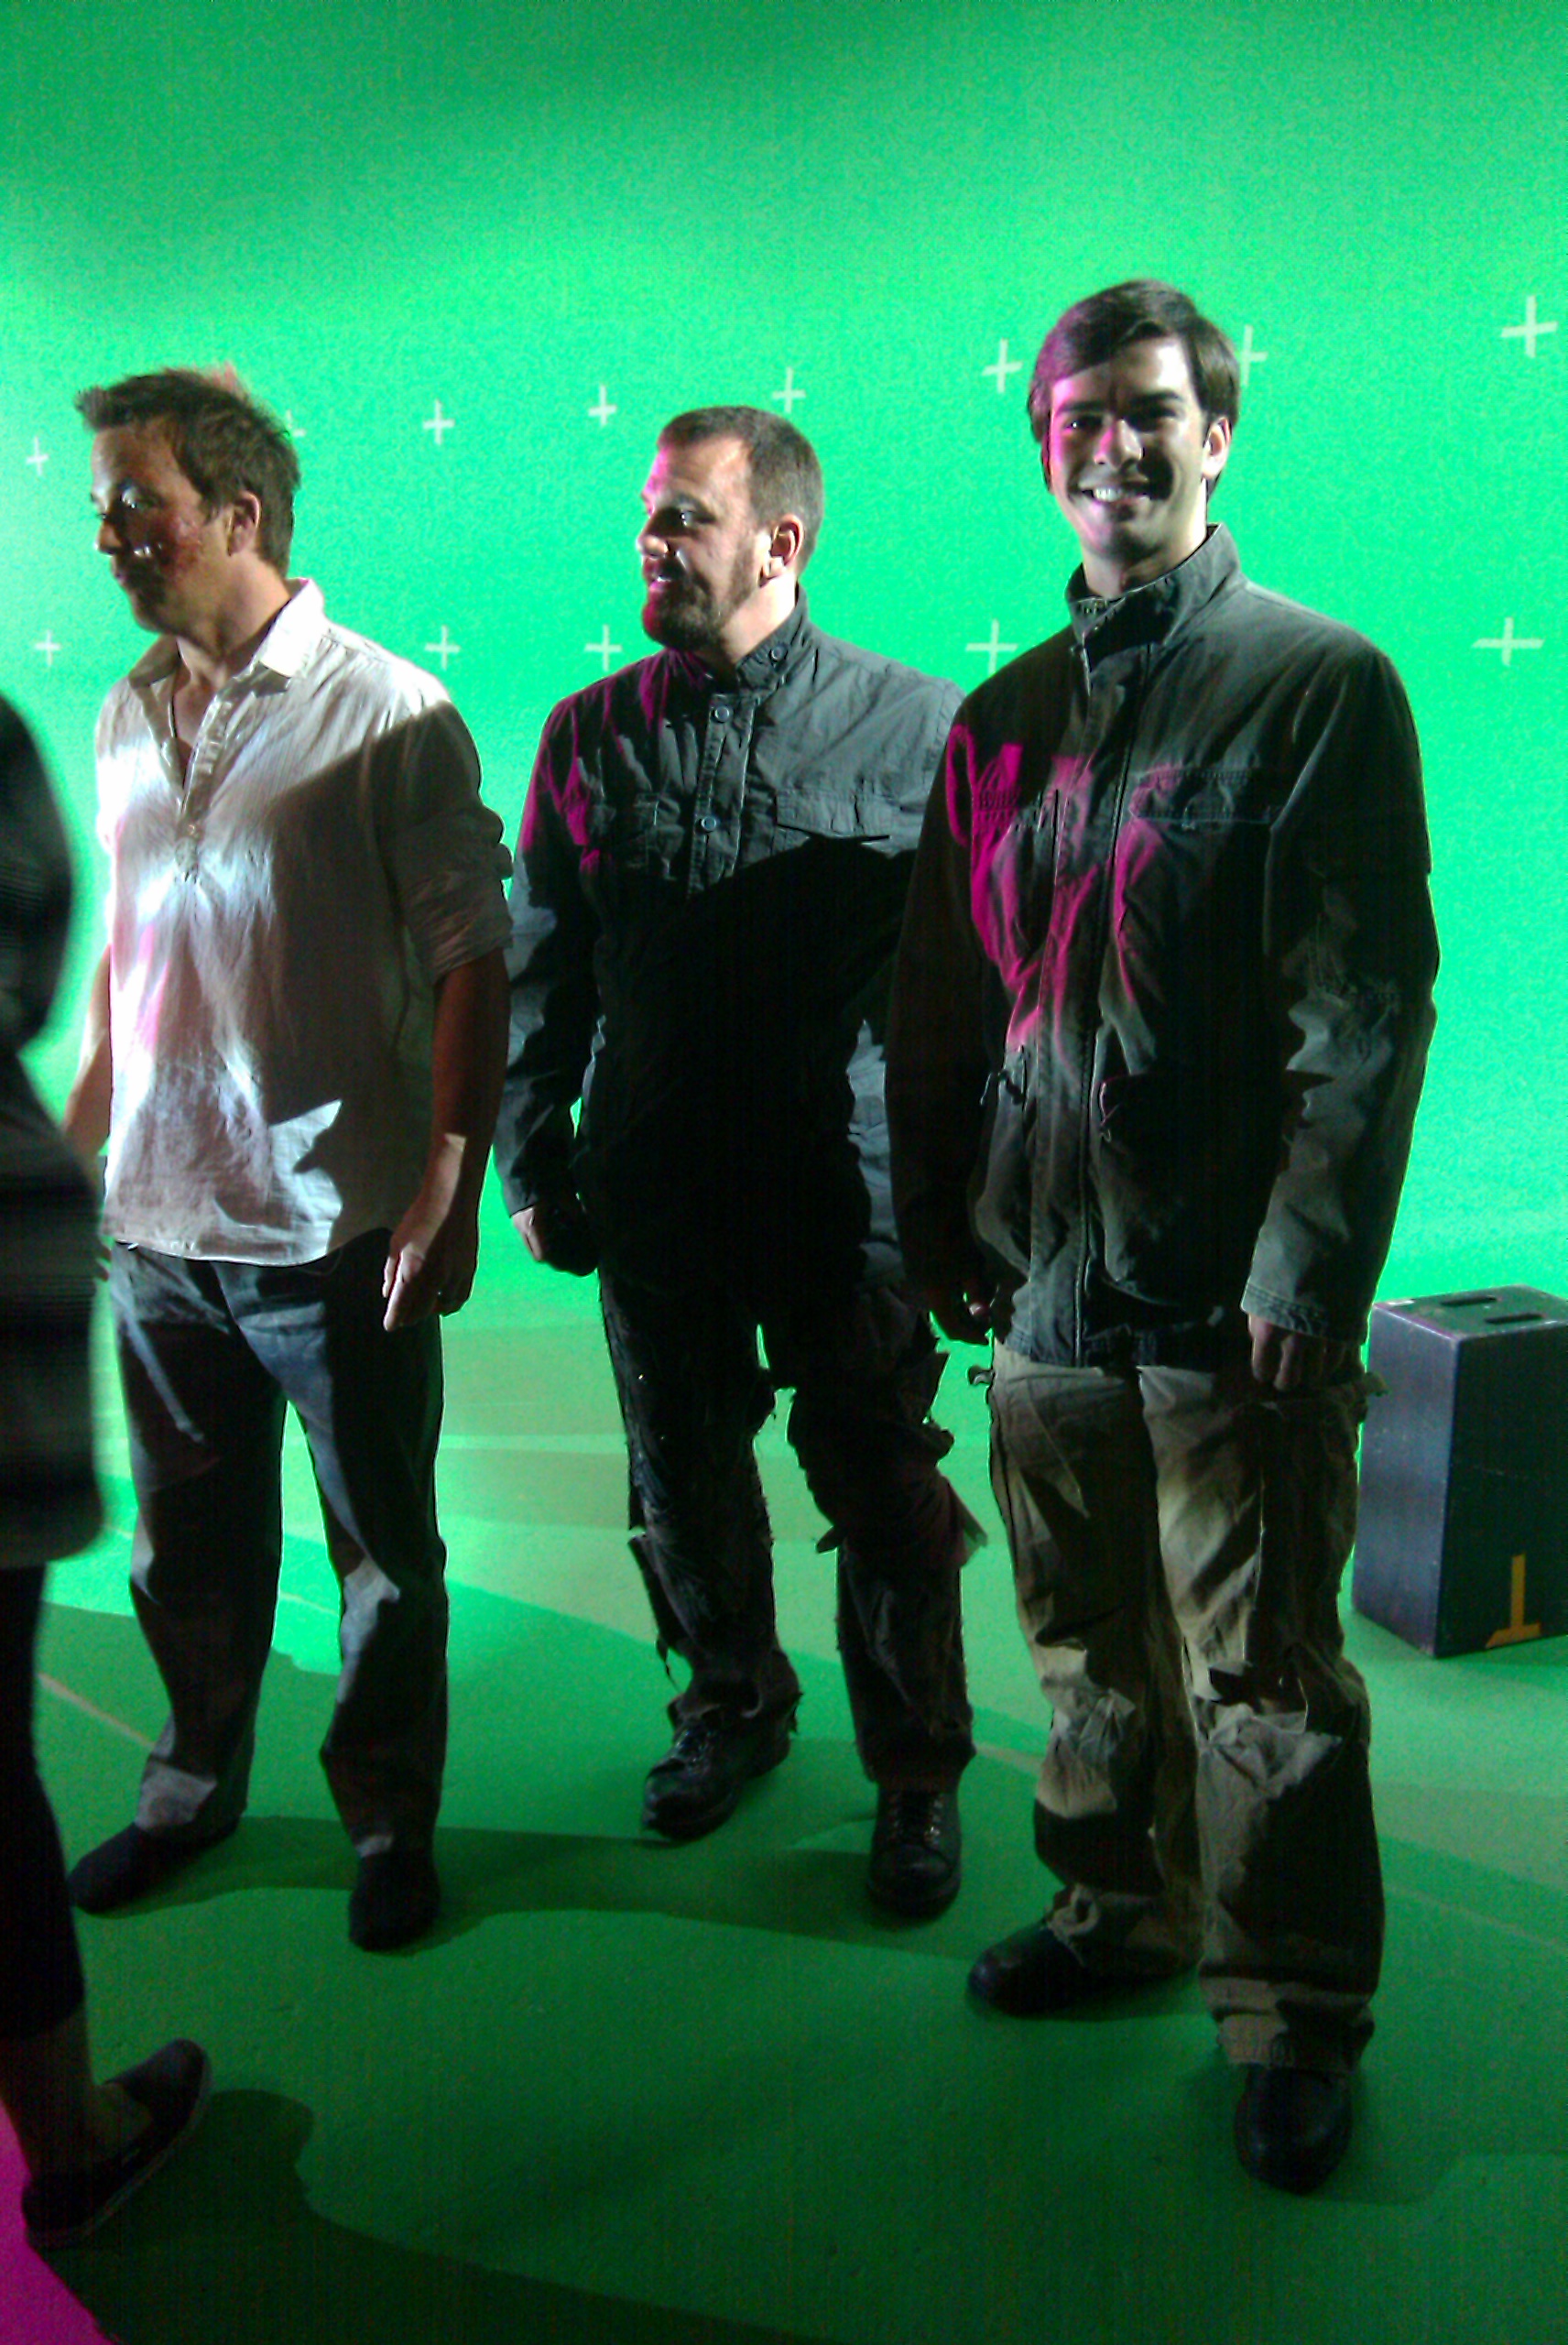 Sean Patrick Flanery, Ward Edmondson, and Kerrington Fier on the set of San Francisco, 2177